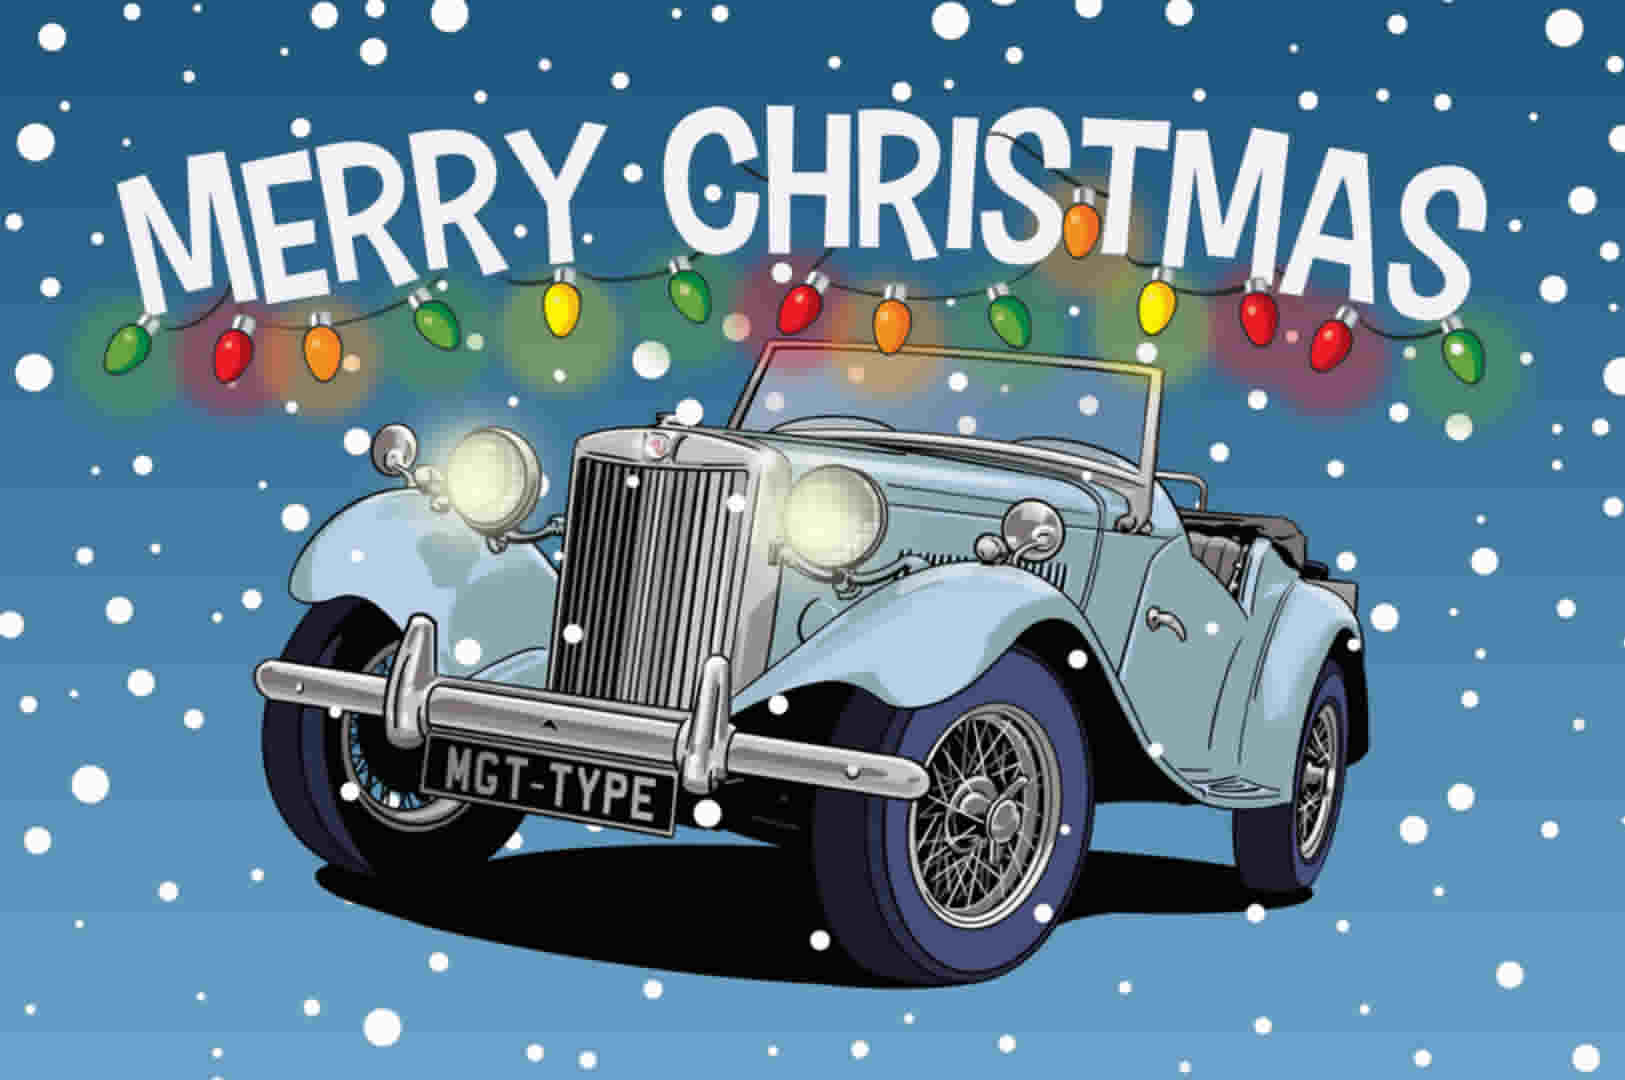 Blue MG T-type car Christmas Card